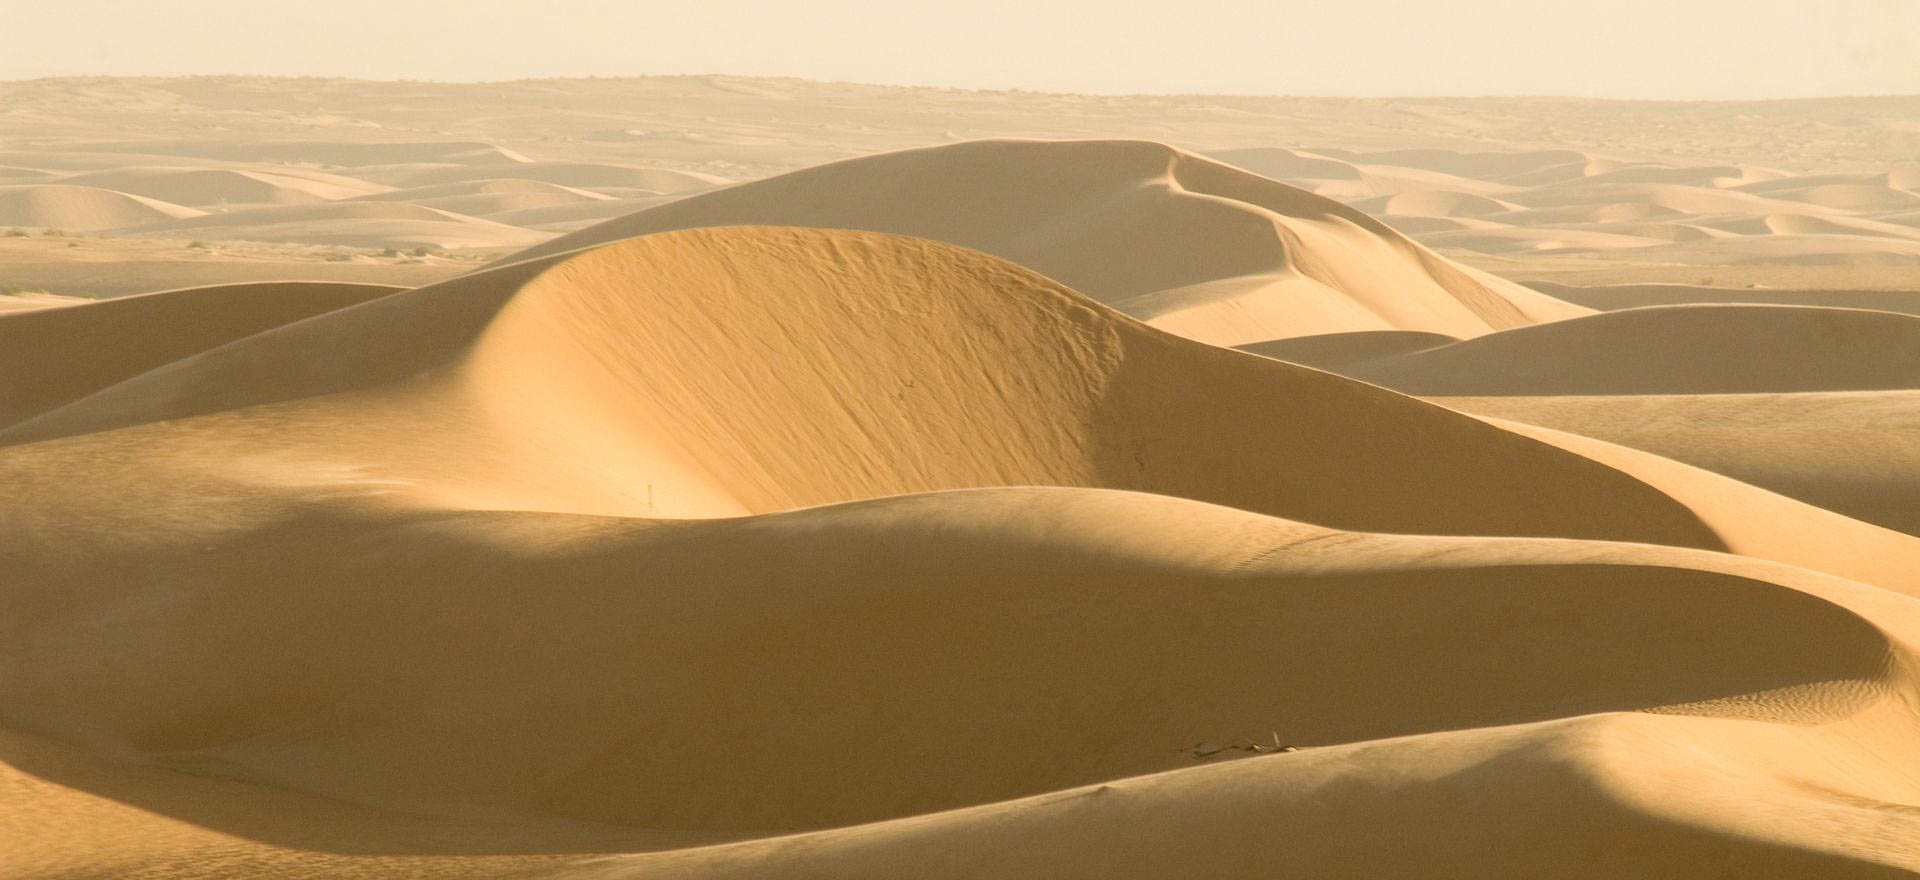 Sand dunes in Mauritania's Adrar region - Mauritania Holidays and Tours